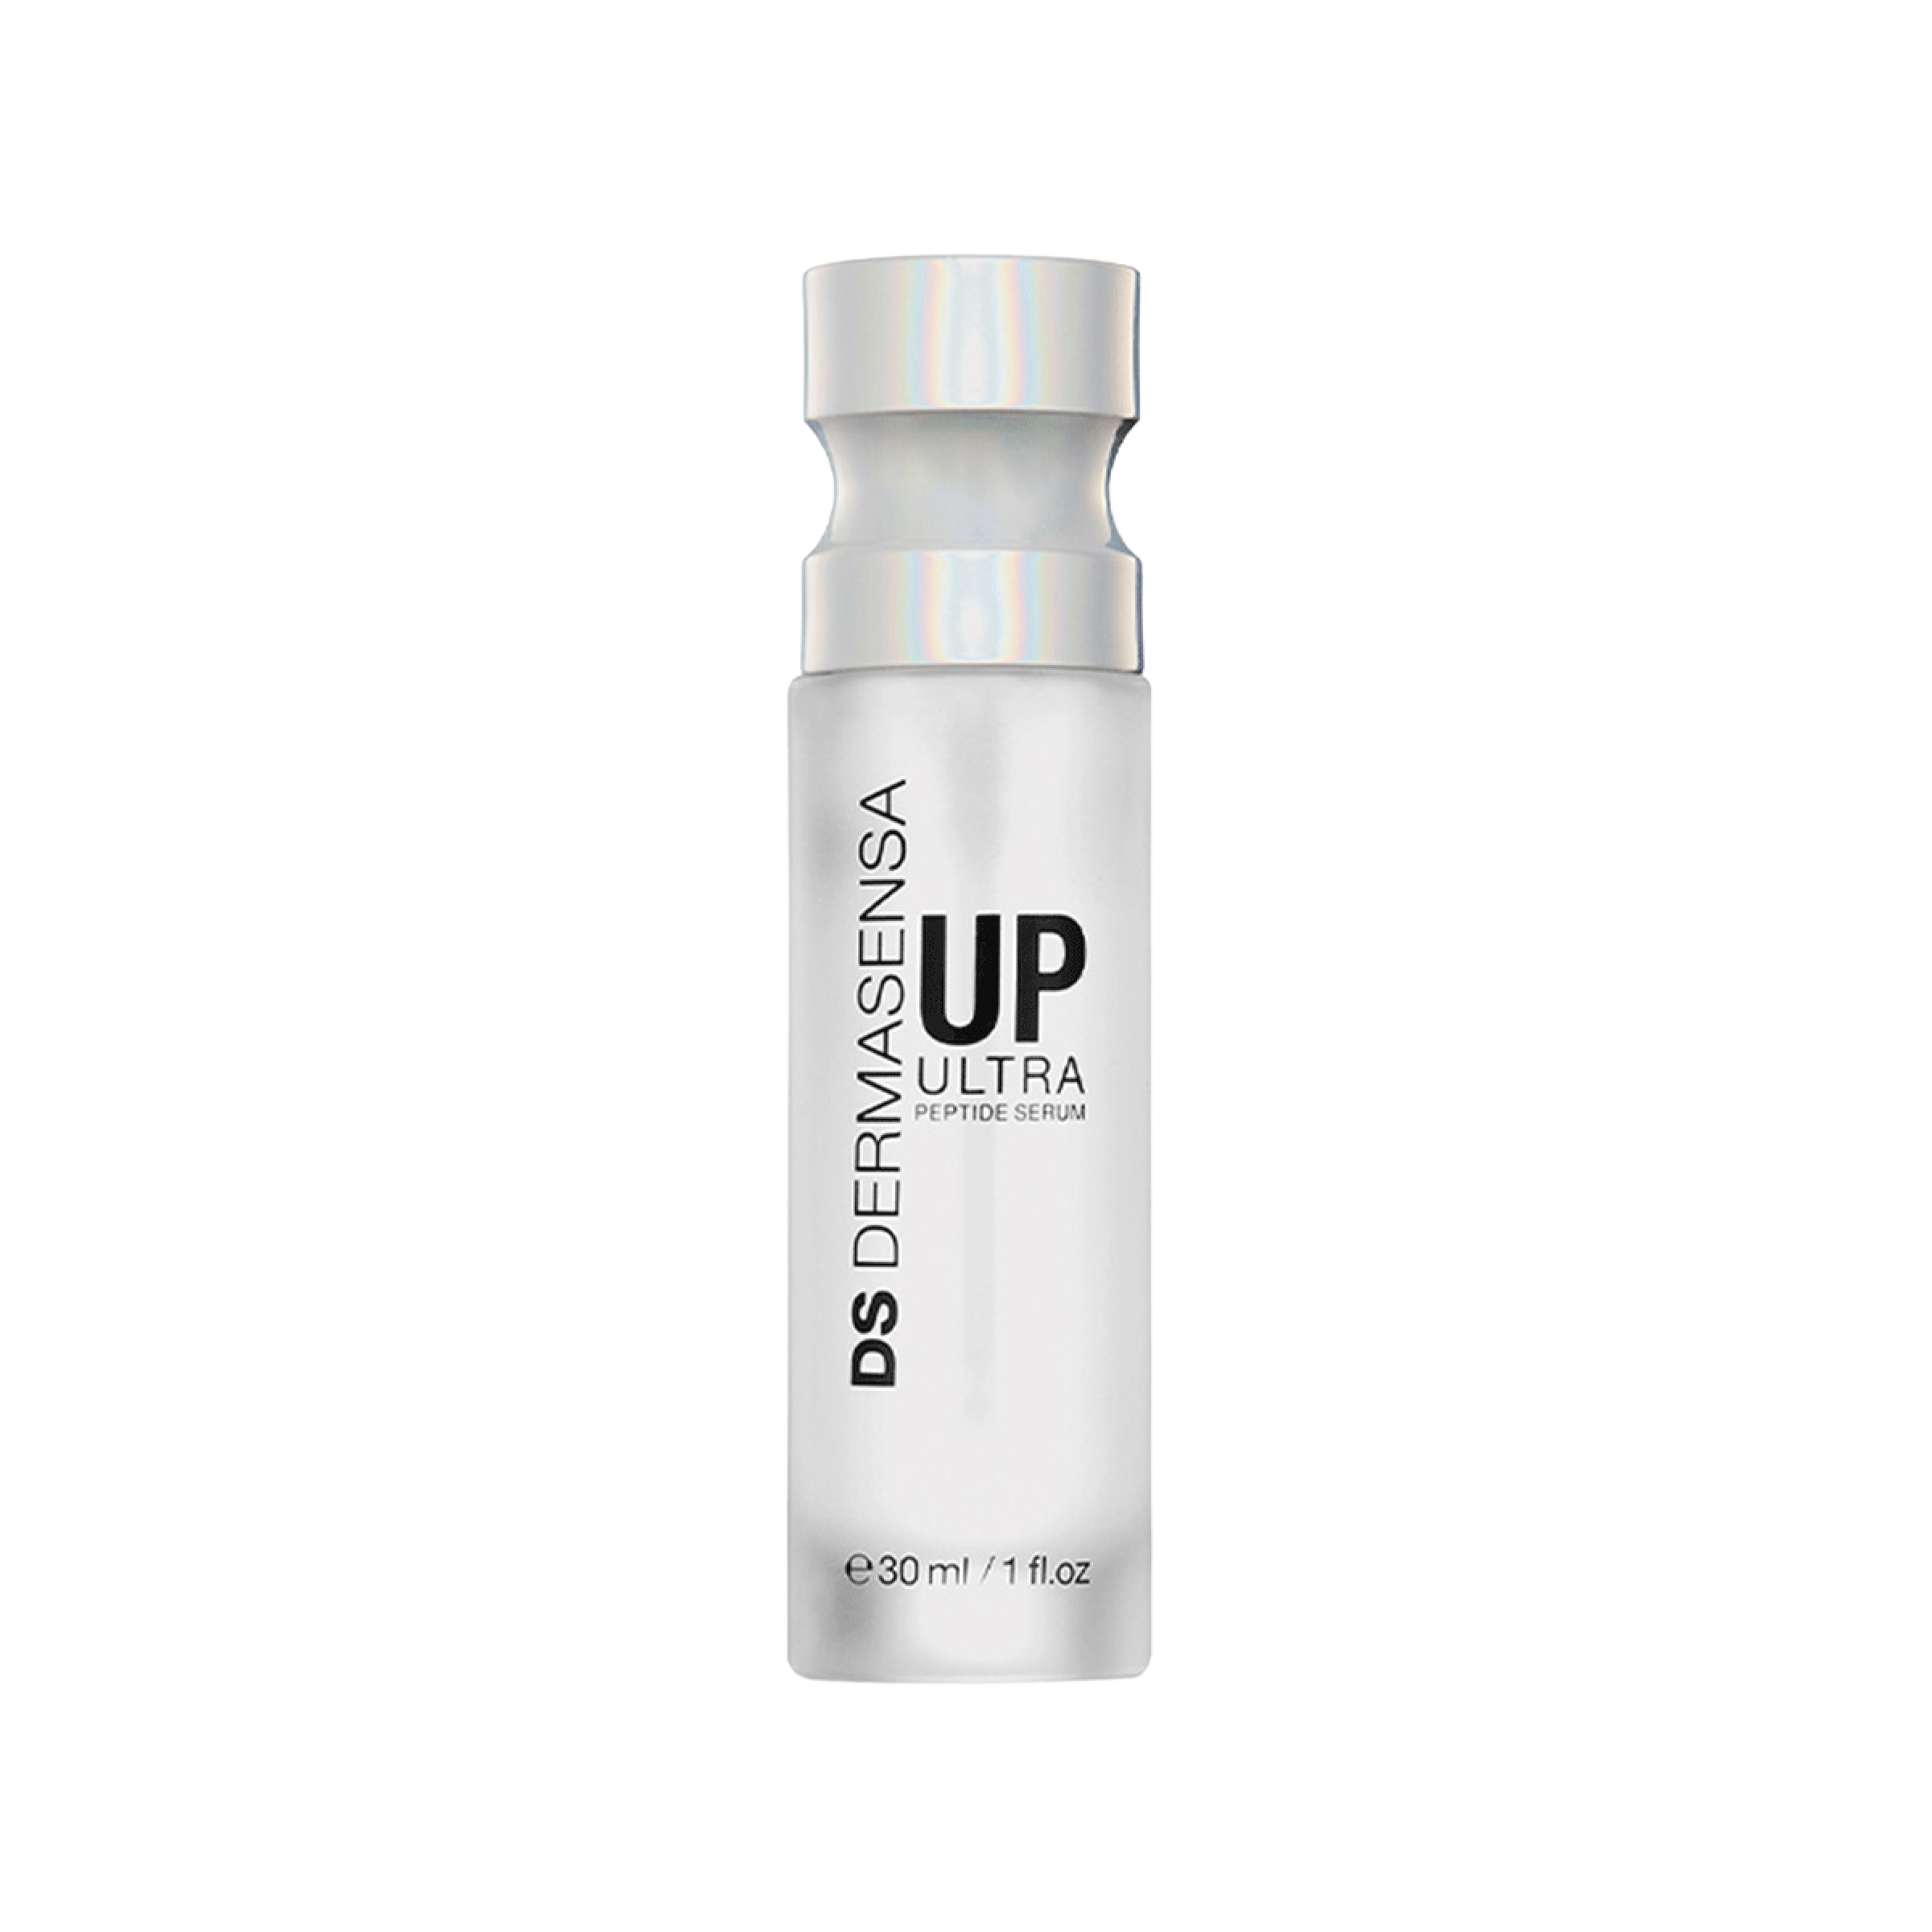 UP Ultra Peptide Serum